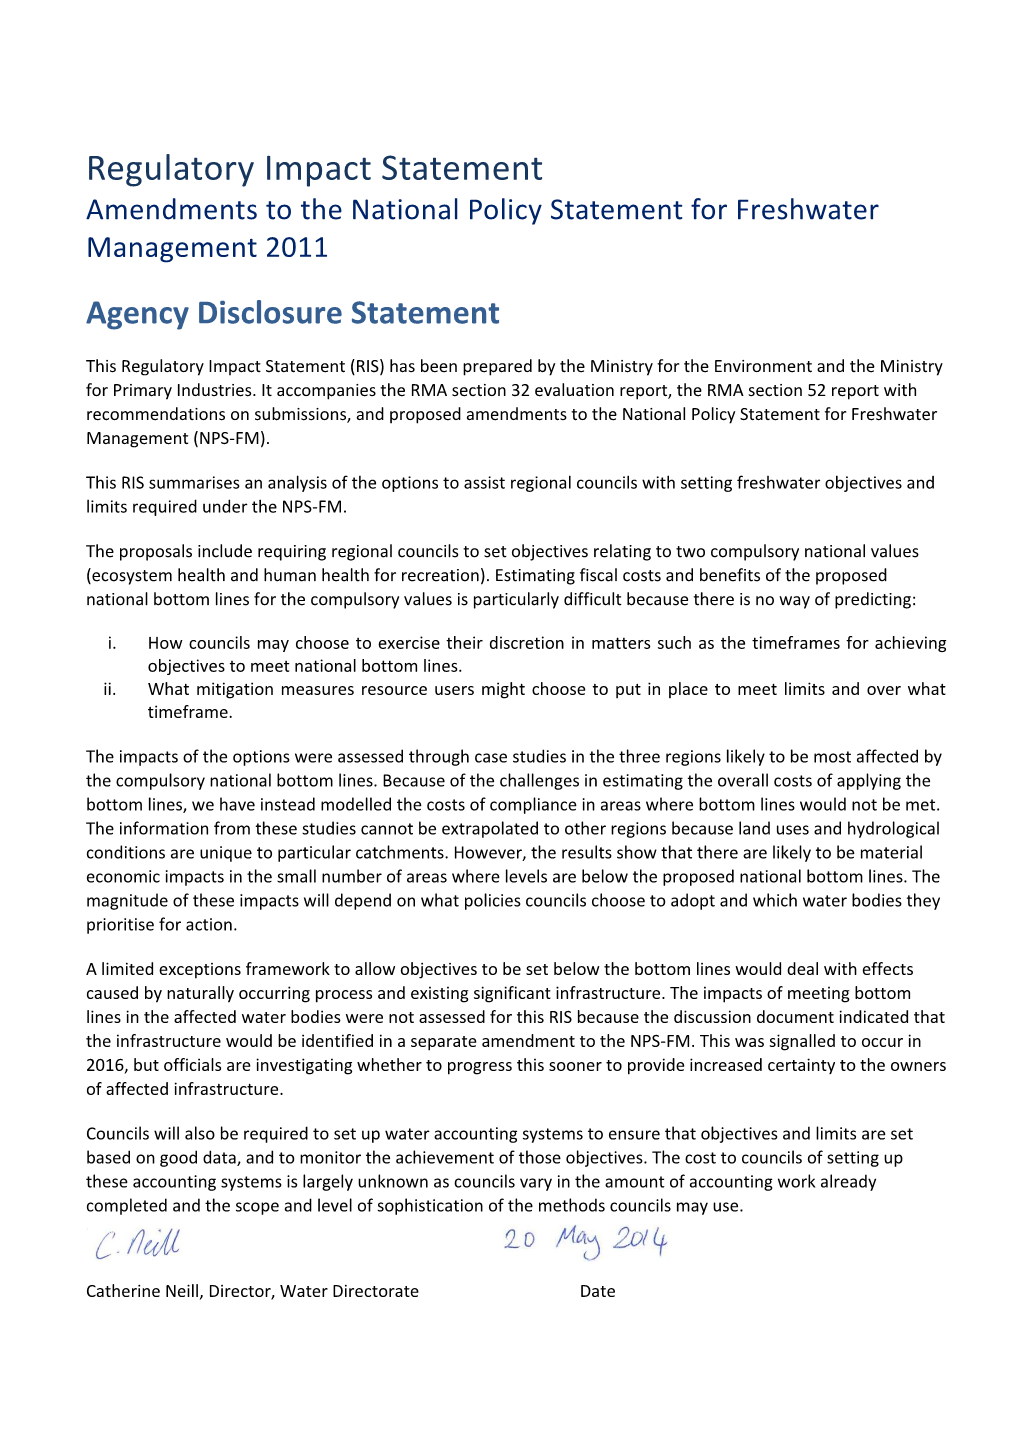 NPS-FM Amendments - Regulatory Impact Statement